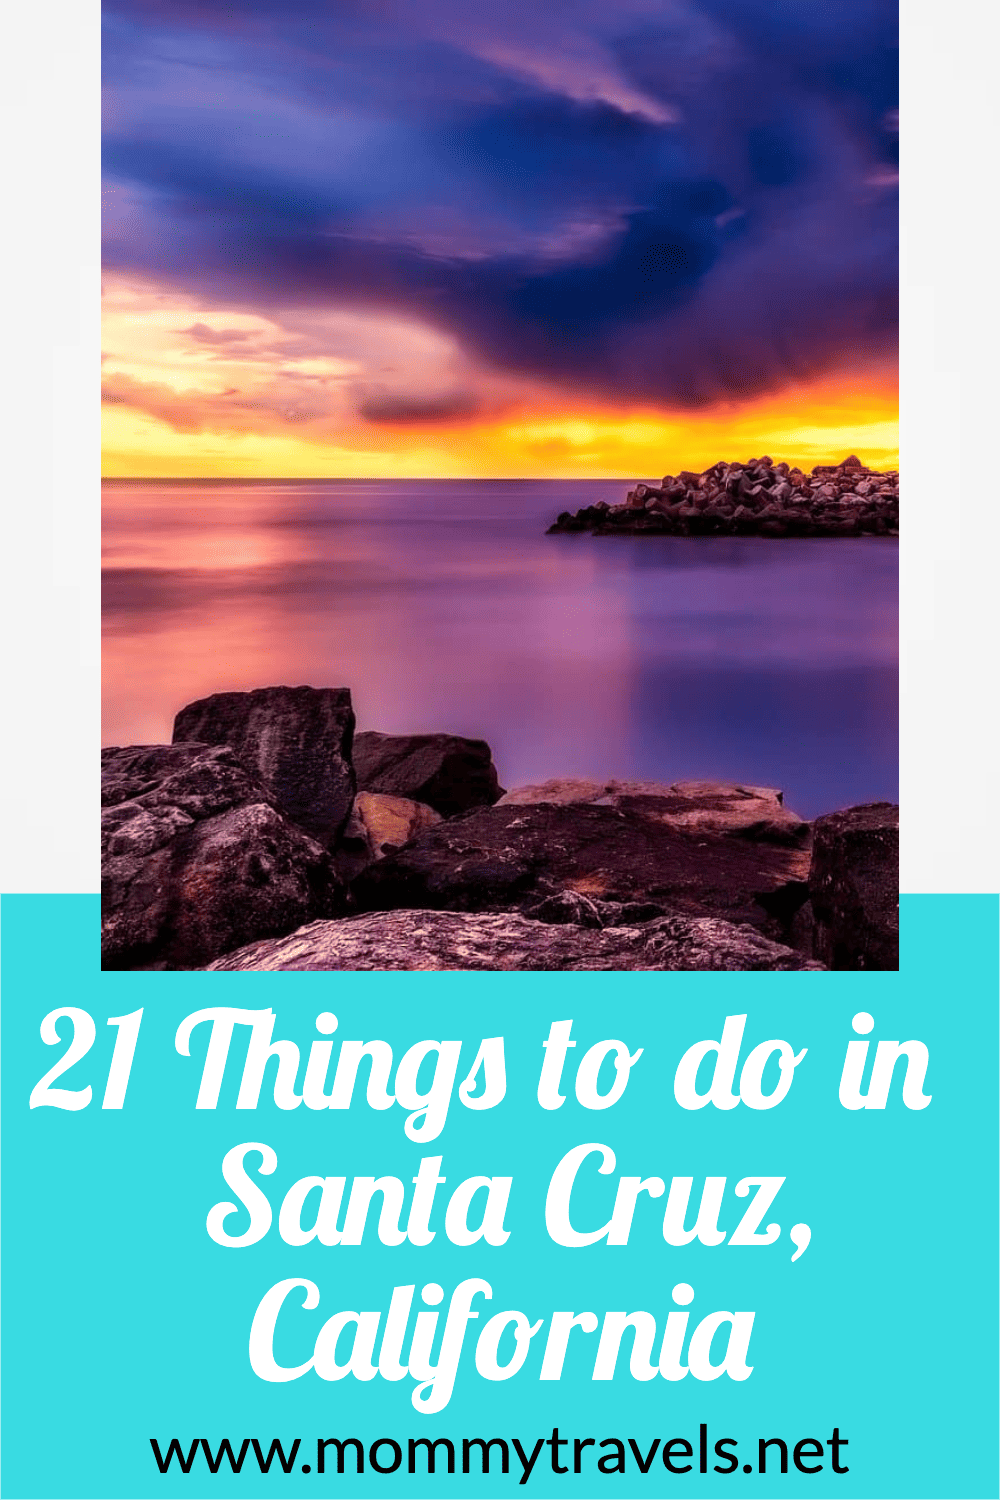 21 Things to do in Santa Cruz
